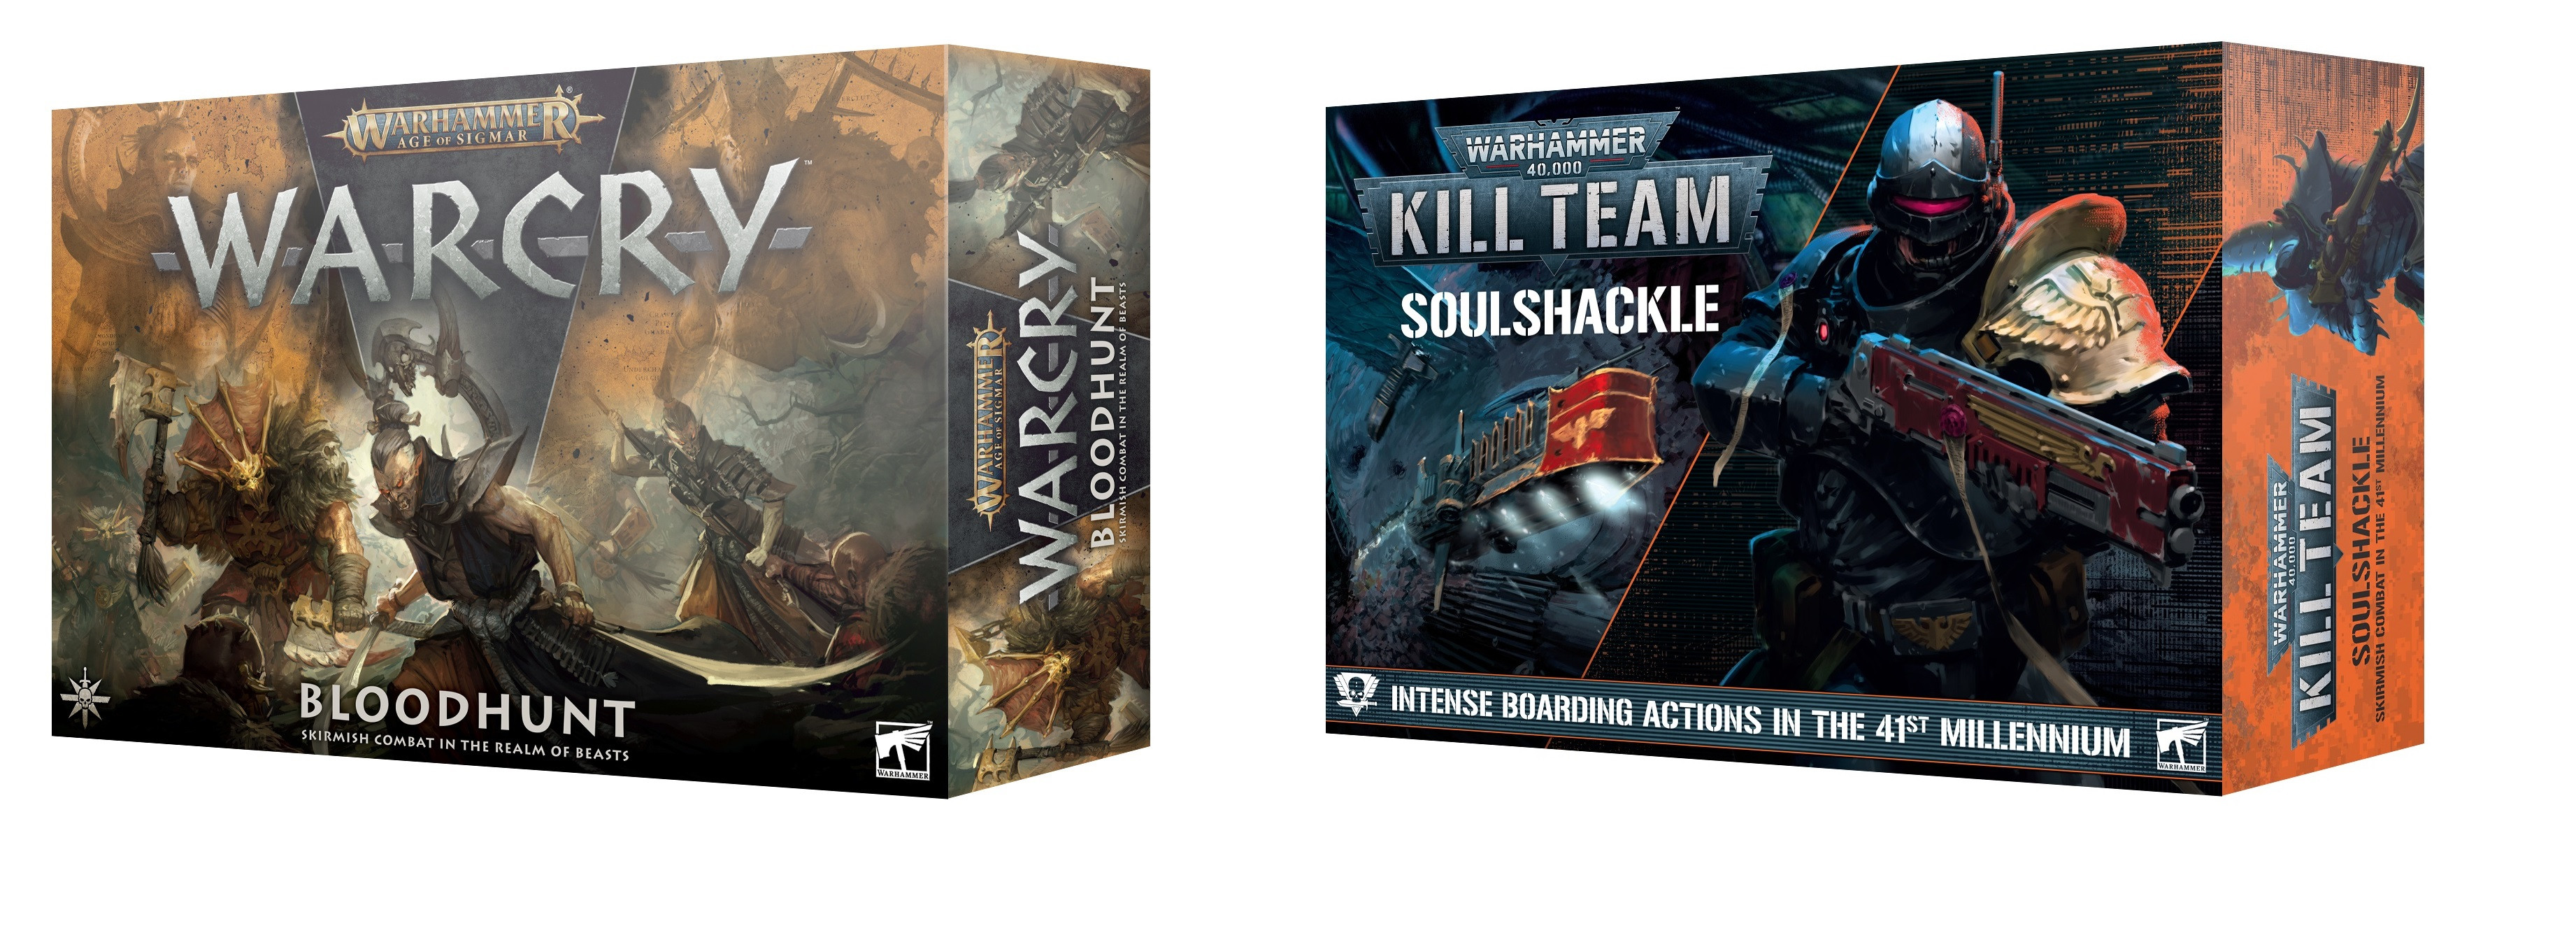 Warcry: Bloodhunt & Kill Team: Soulshackle